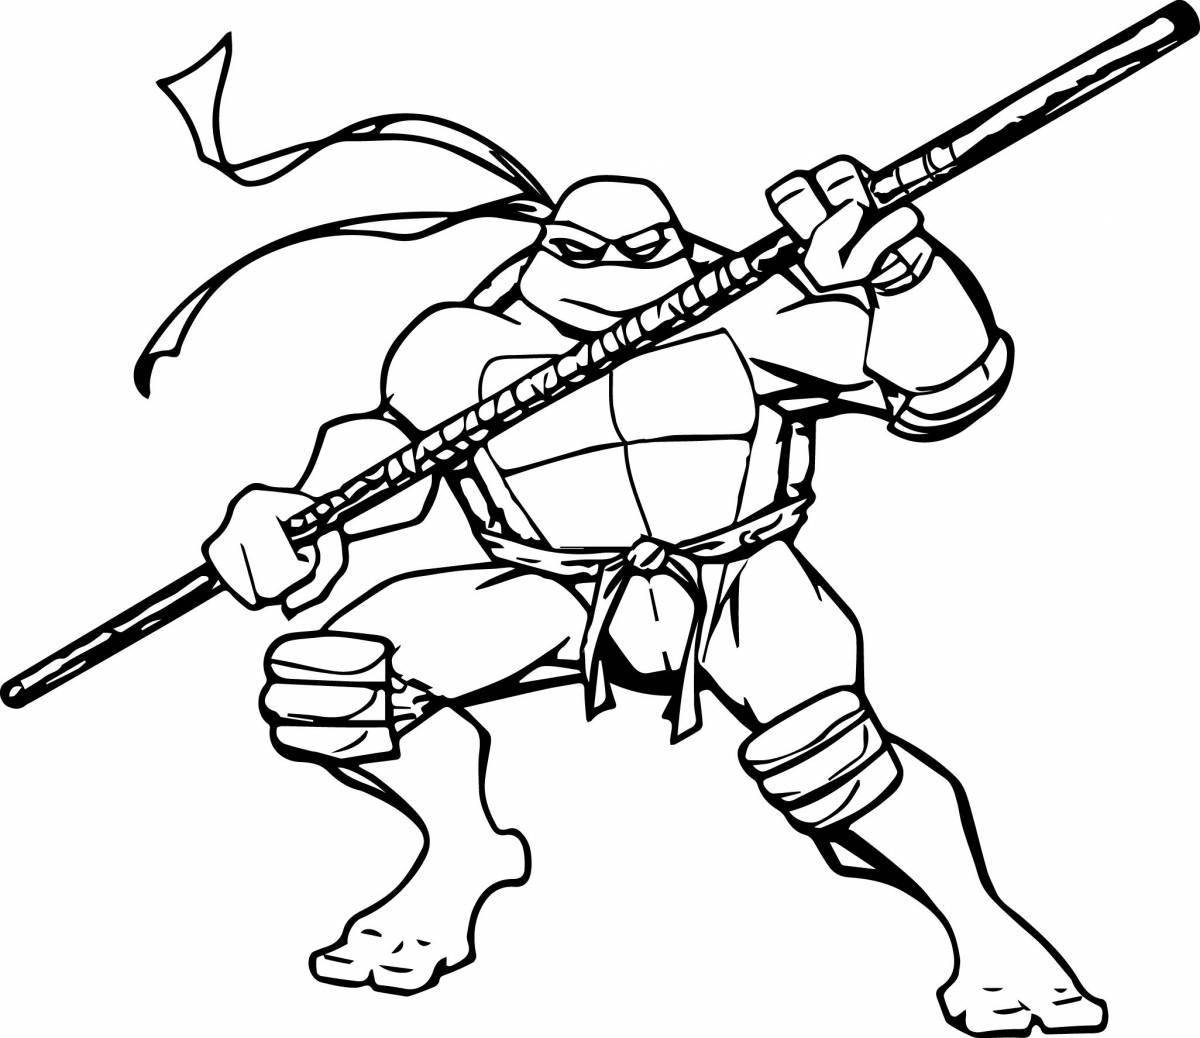 Teenage Mutant Ninja Turtles coloring pages for boys